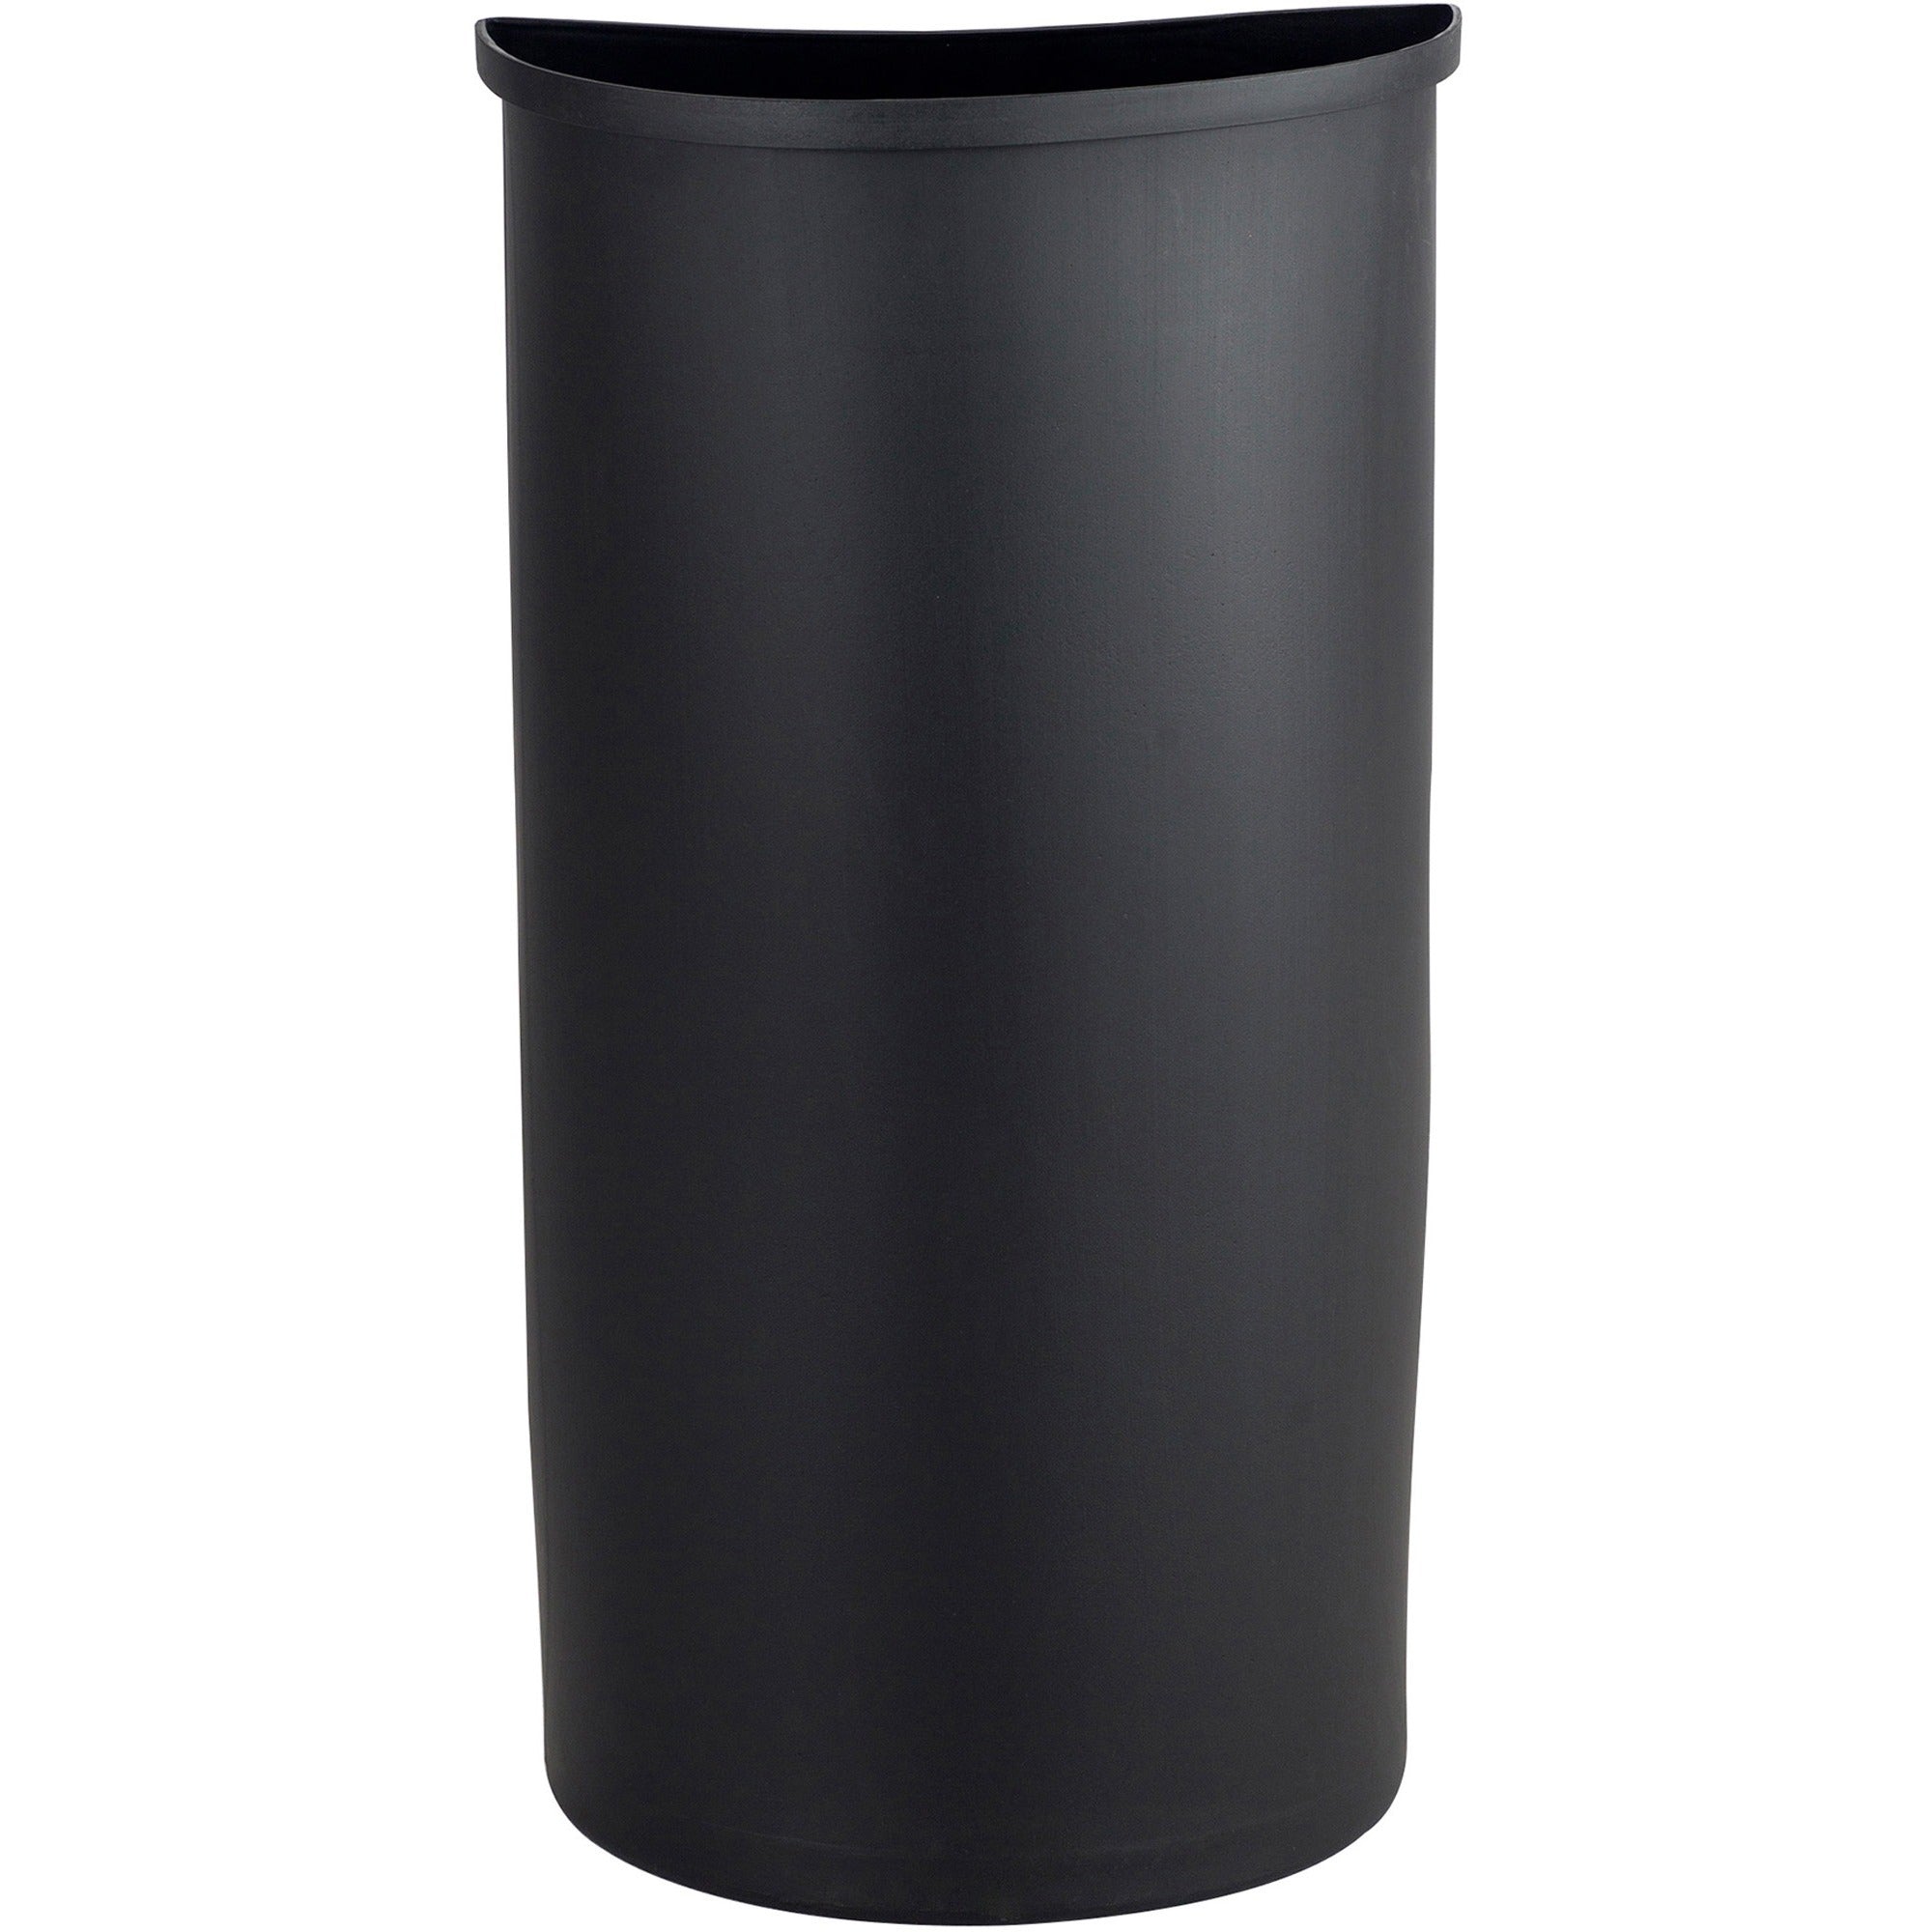 safco-half-round-receptacle-1250-gal-capacity-half-round-325-height-x-175-width-x-9-depth-steel-rubber-plastic-black-1-each_saf9940bl - 2